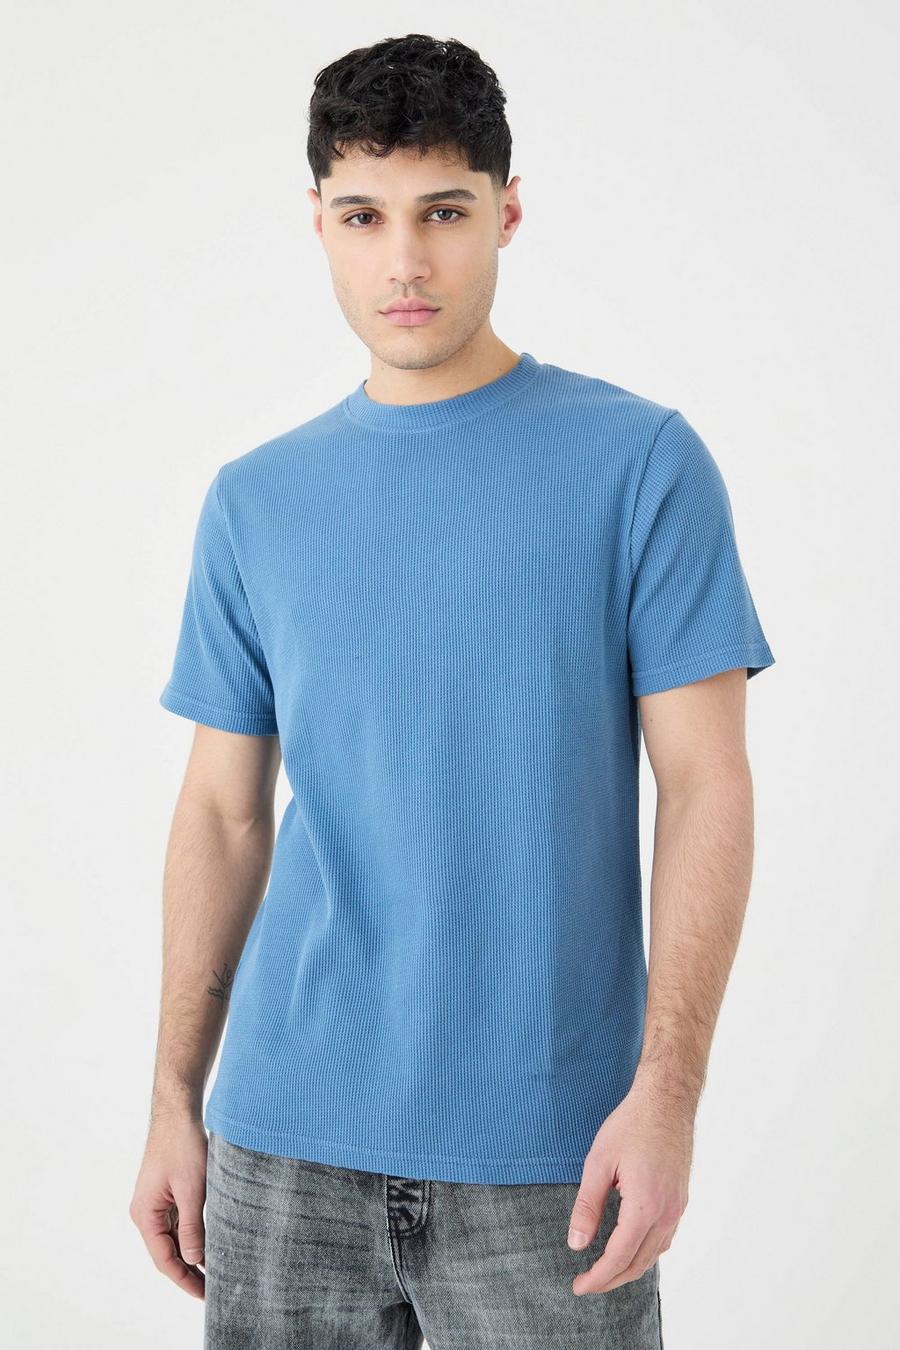 Slate blue Wafel Gebreid Slim Fit T-Shirt